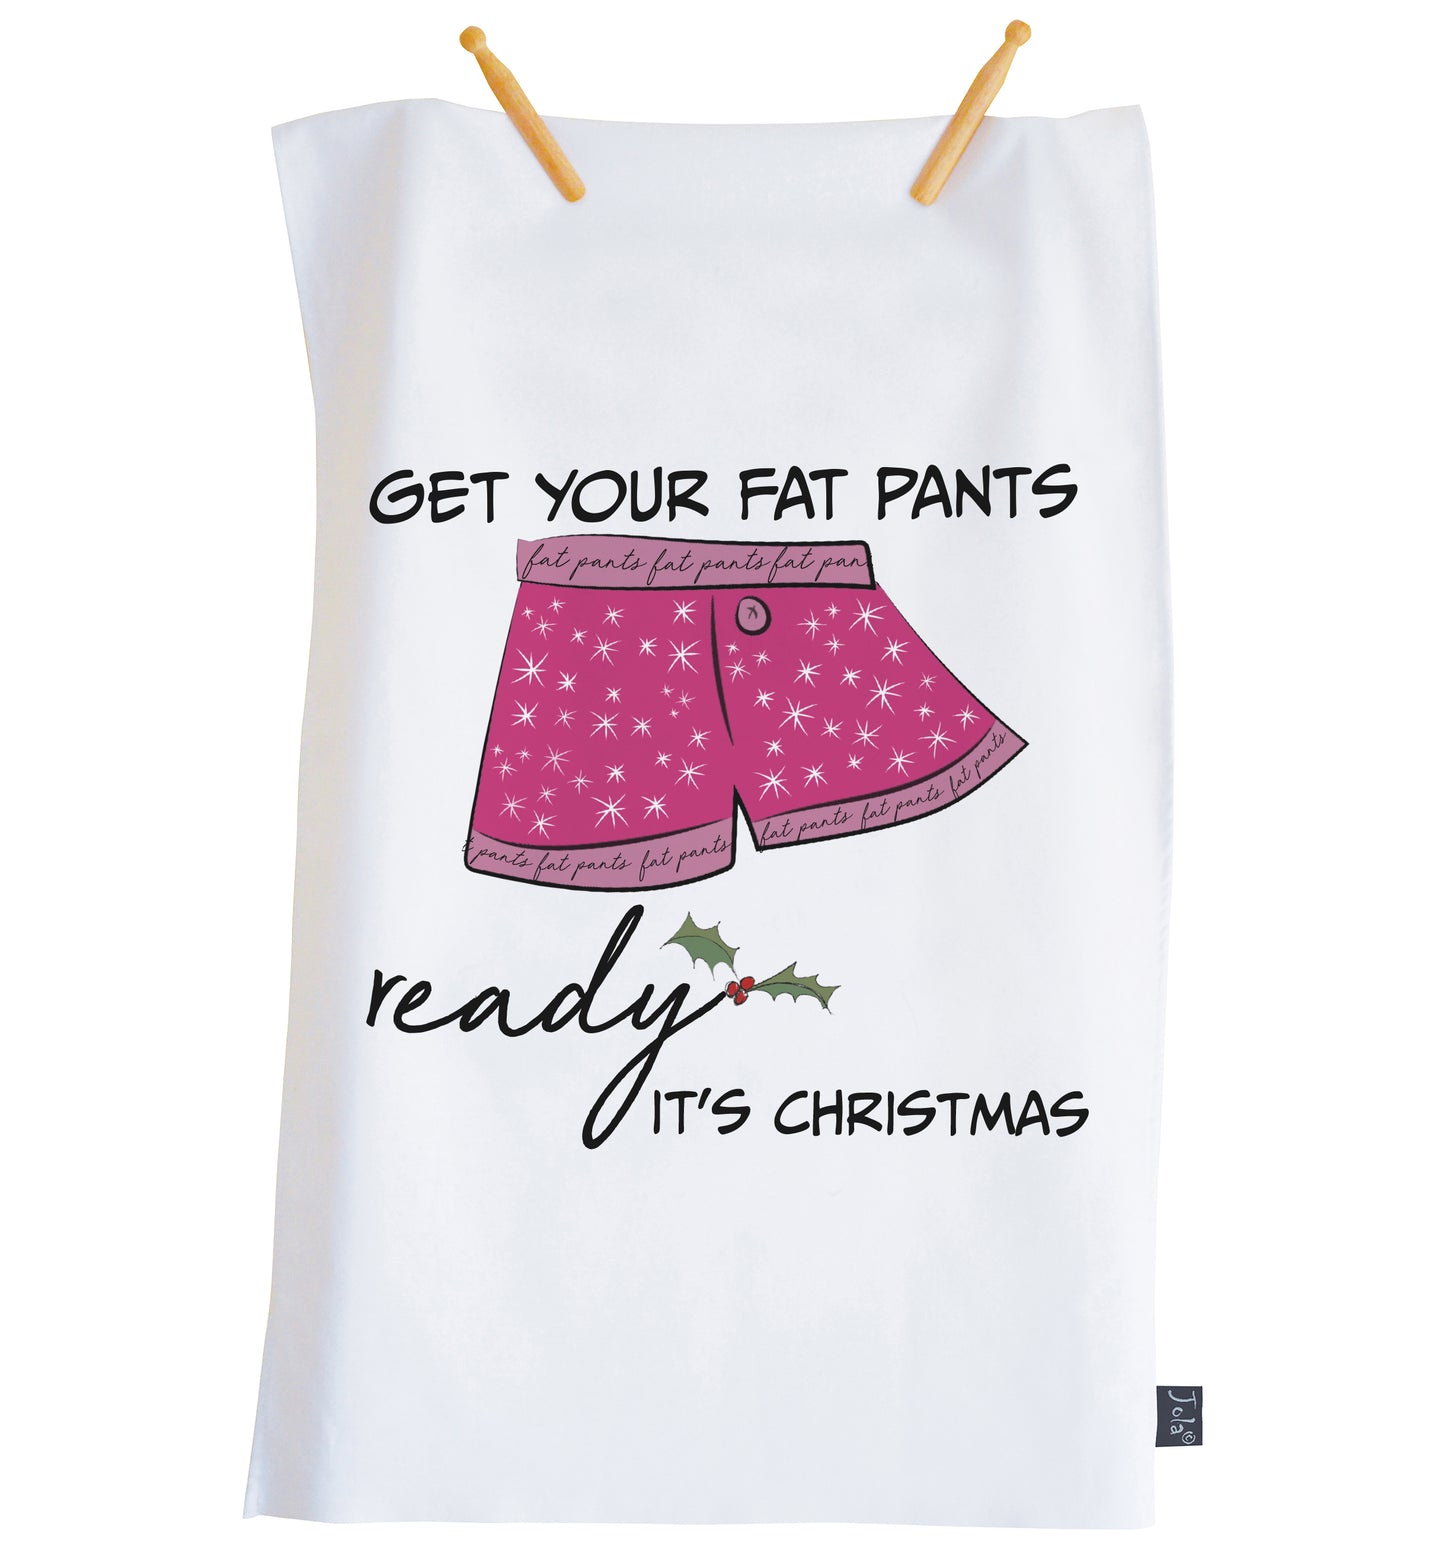 Get Your Fat Pants Ready Christmas tea towel